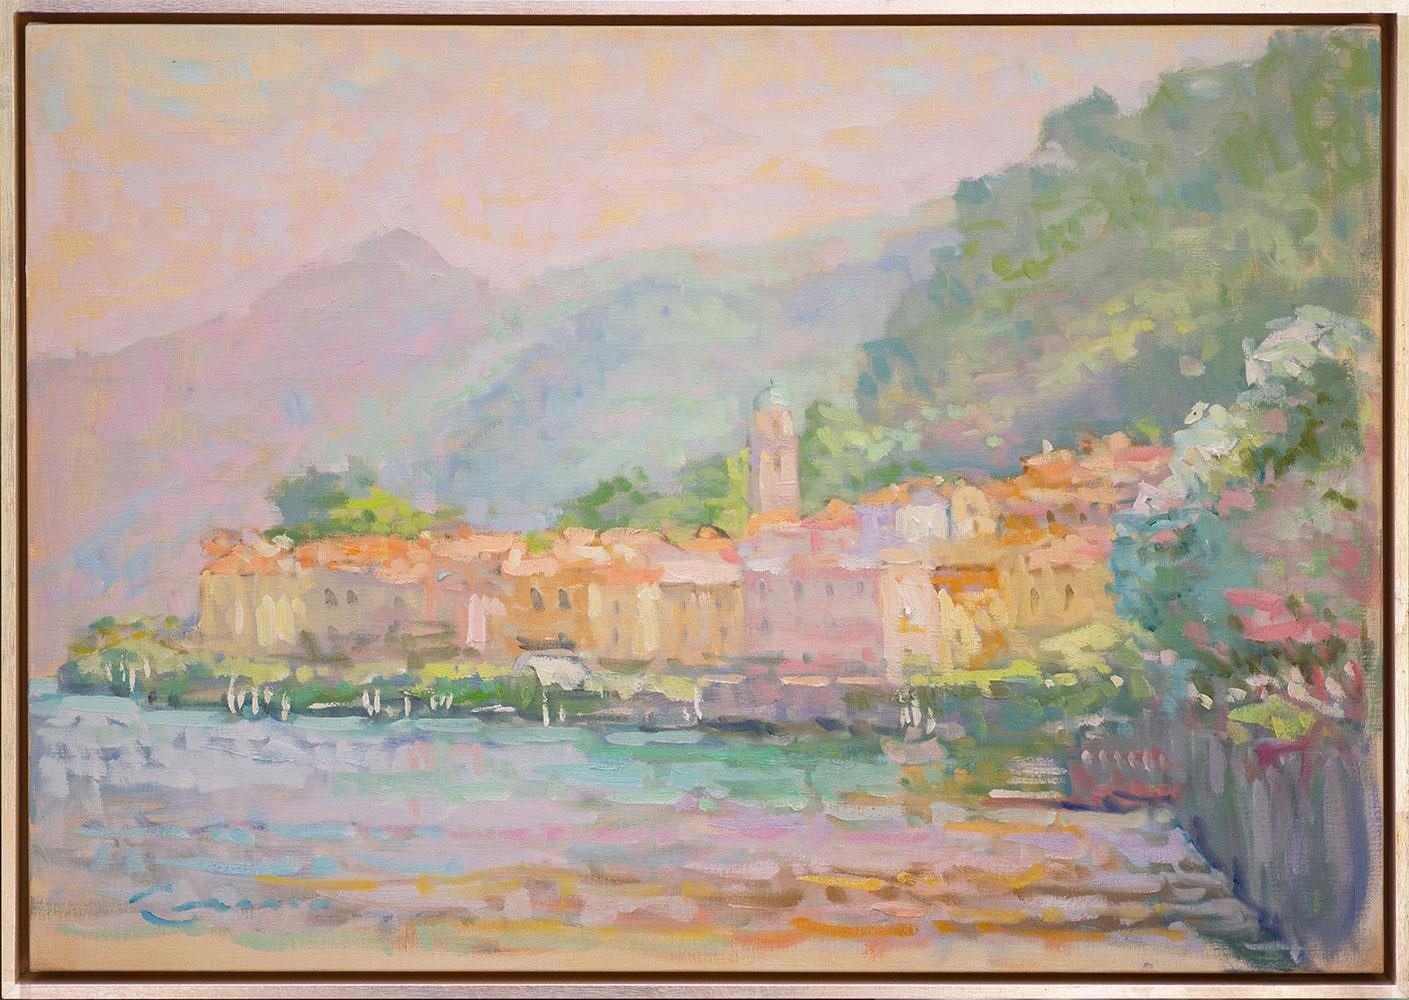 Jerry Fresia Landscape Painting - "June Sonata" – Impressionist landscape painting, oil on canvas, plein air